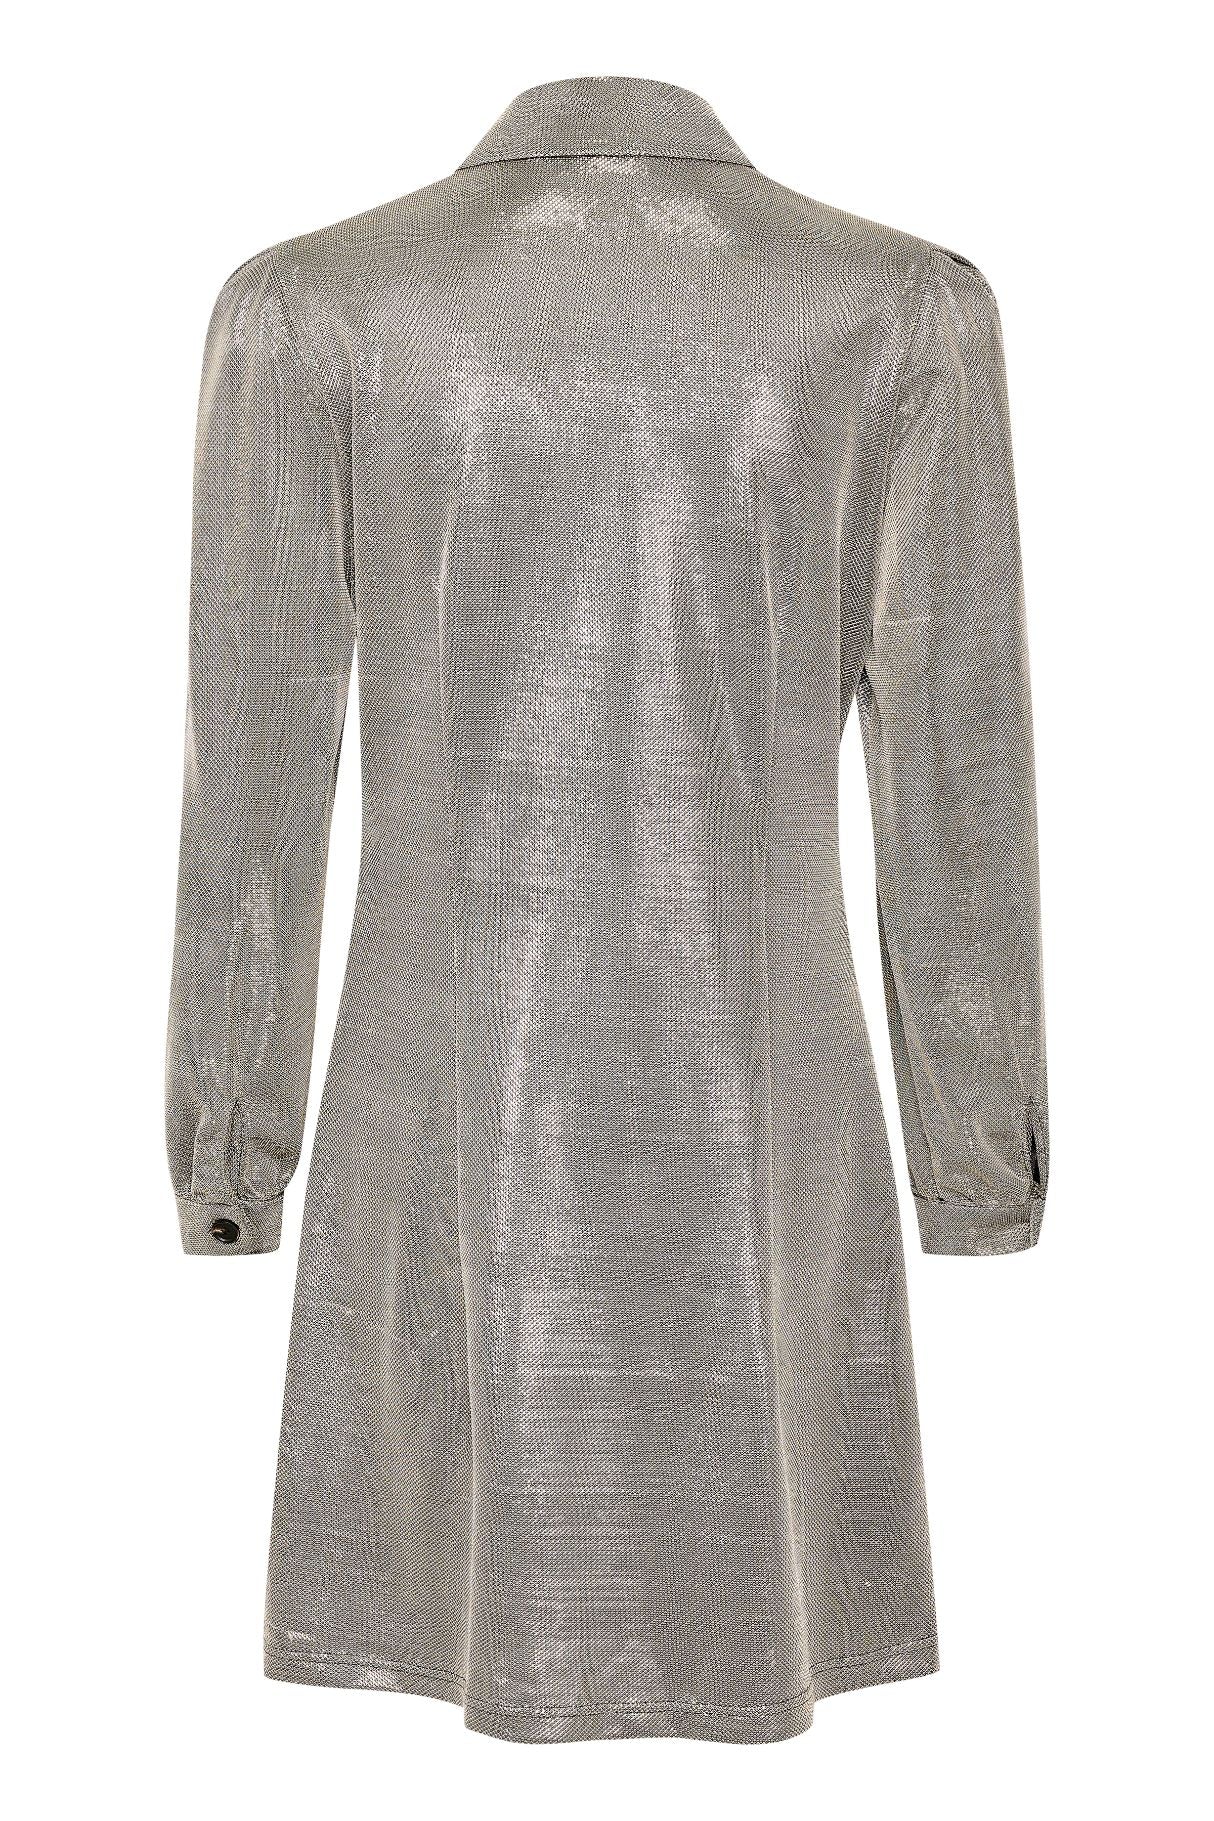 KansasKB Dress | Silver